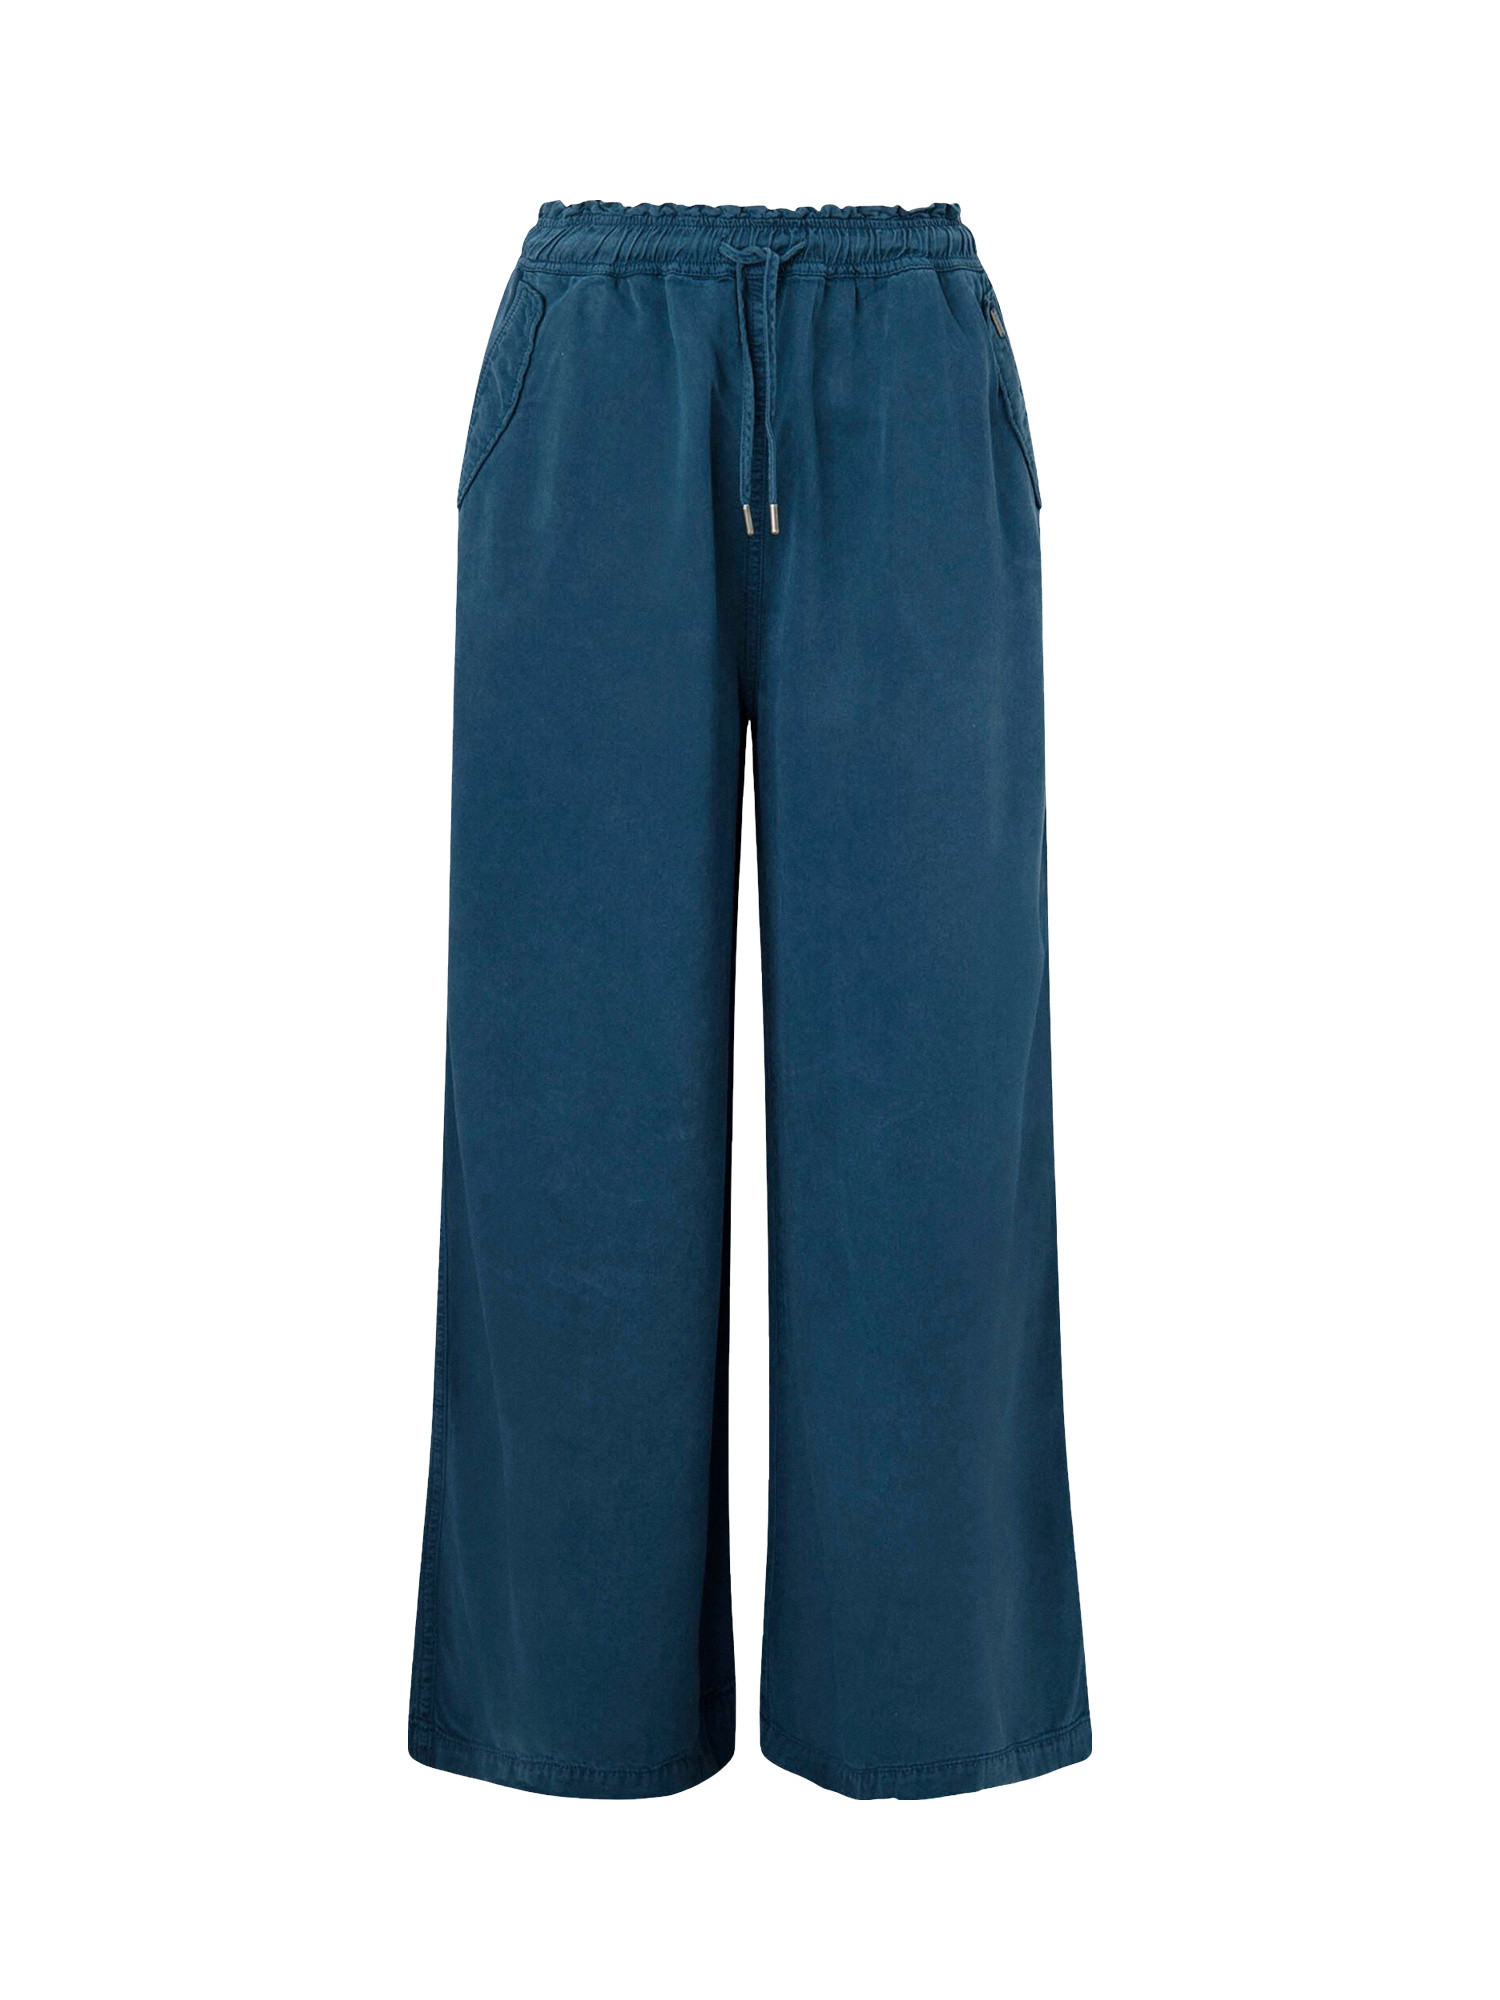 Pepe Jeans - Pantaloni a vita alta, Blu scuro, large image number 0